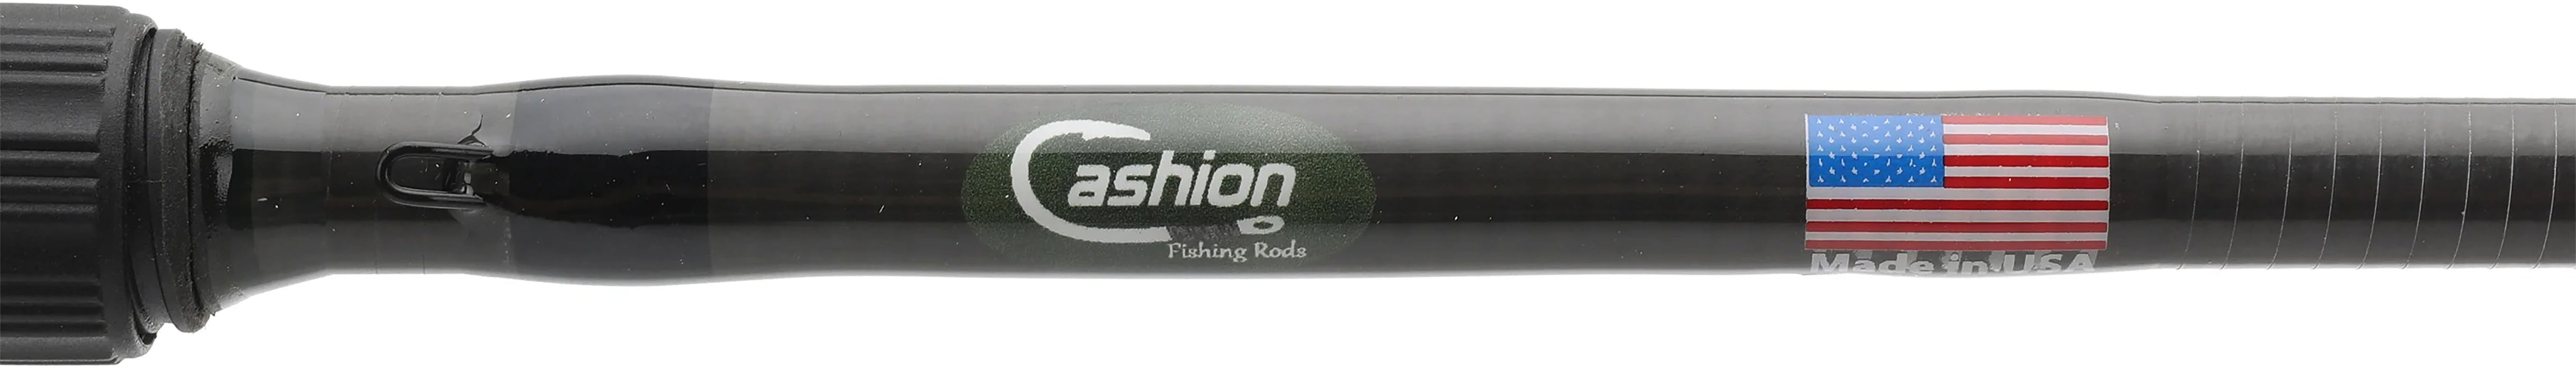 Cashion ICON Series Swimbait Casting Rods